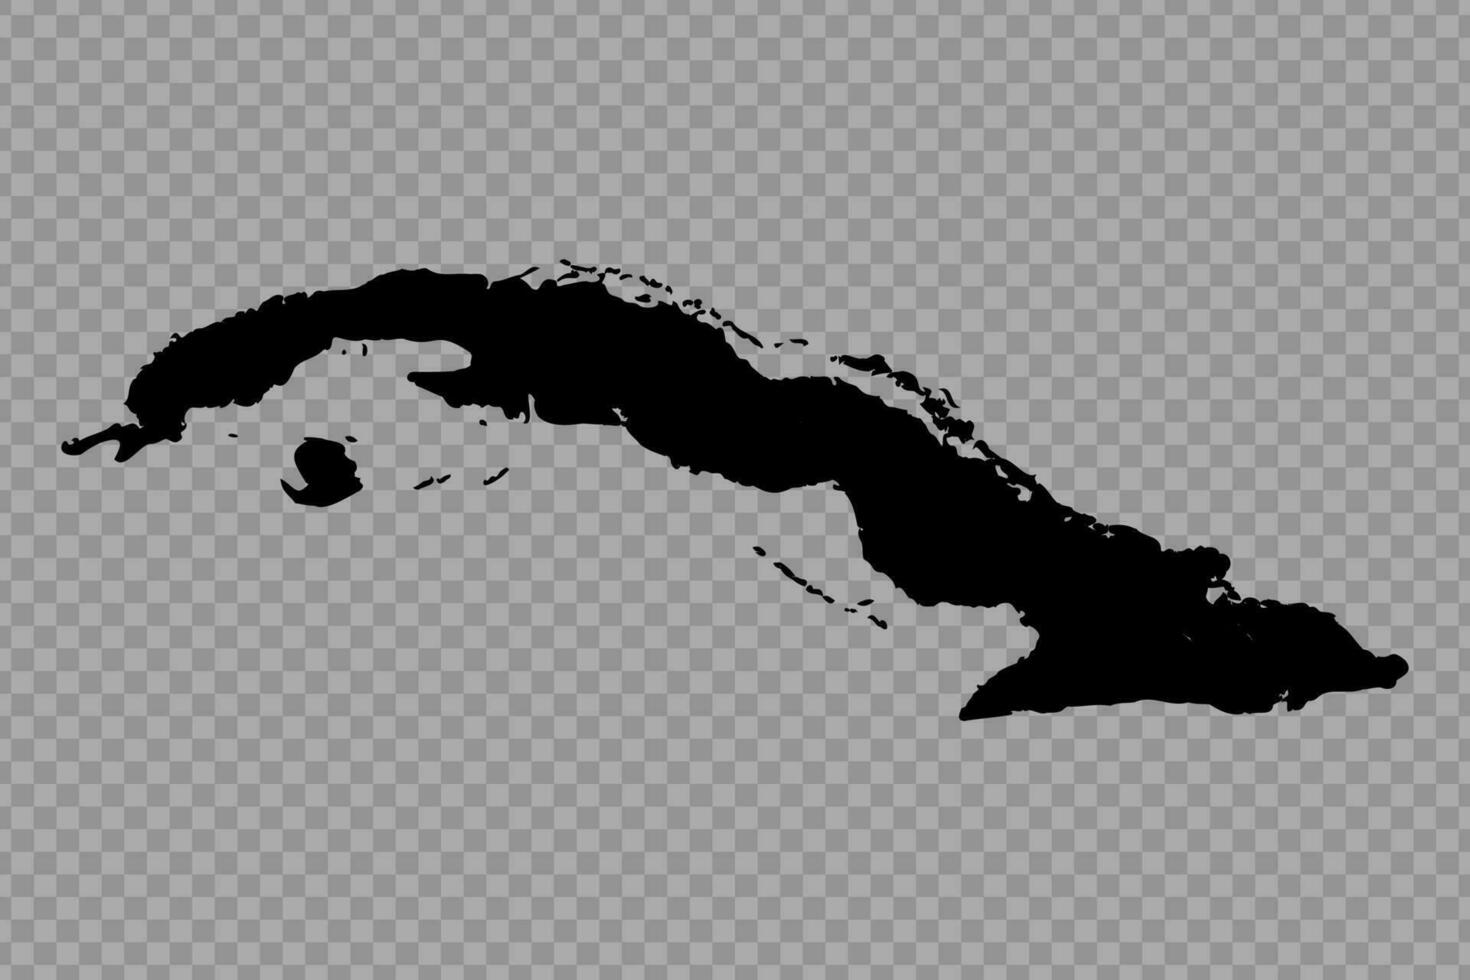 Transparent Background Cuba Simple map vector